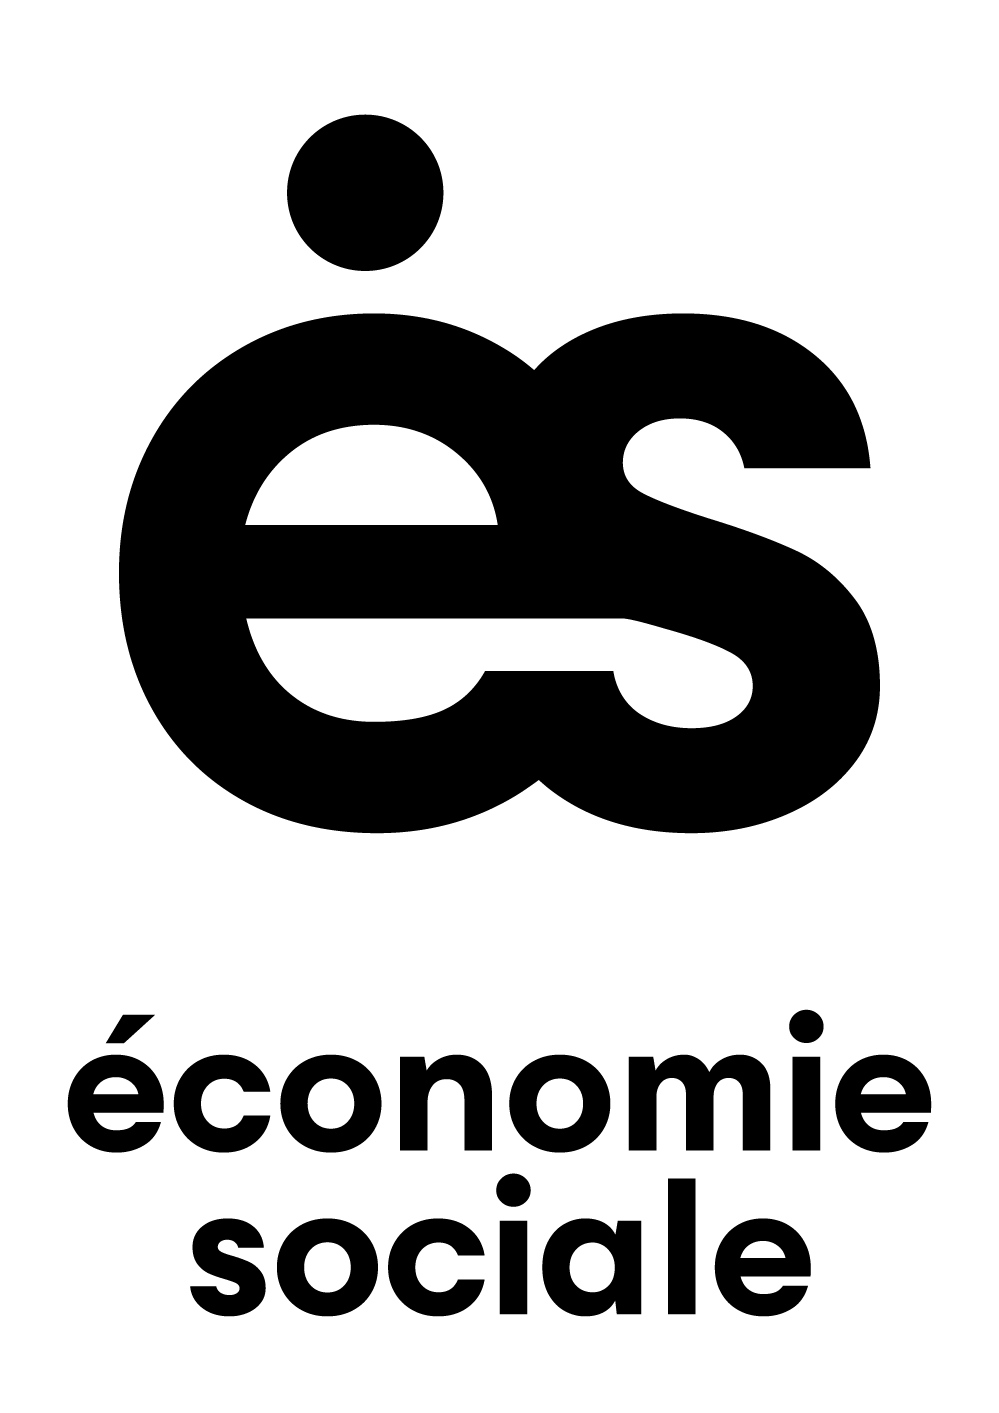 Logo Tourisme Laurentides